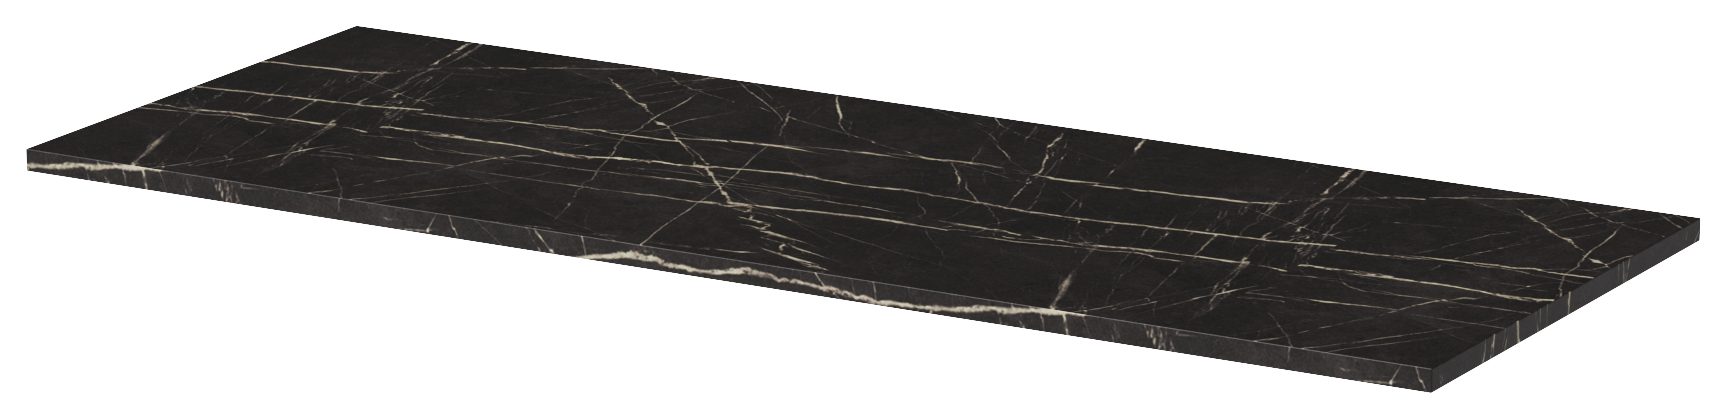 Image of Wickes Tallinn Black Marble Worktop - 465 x 1310 x 18mm